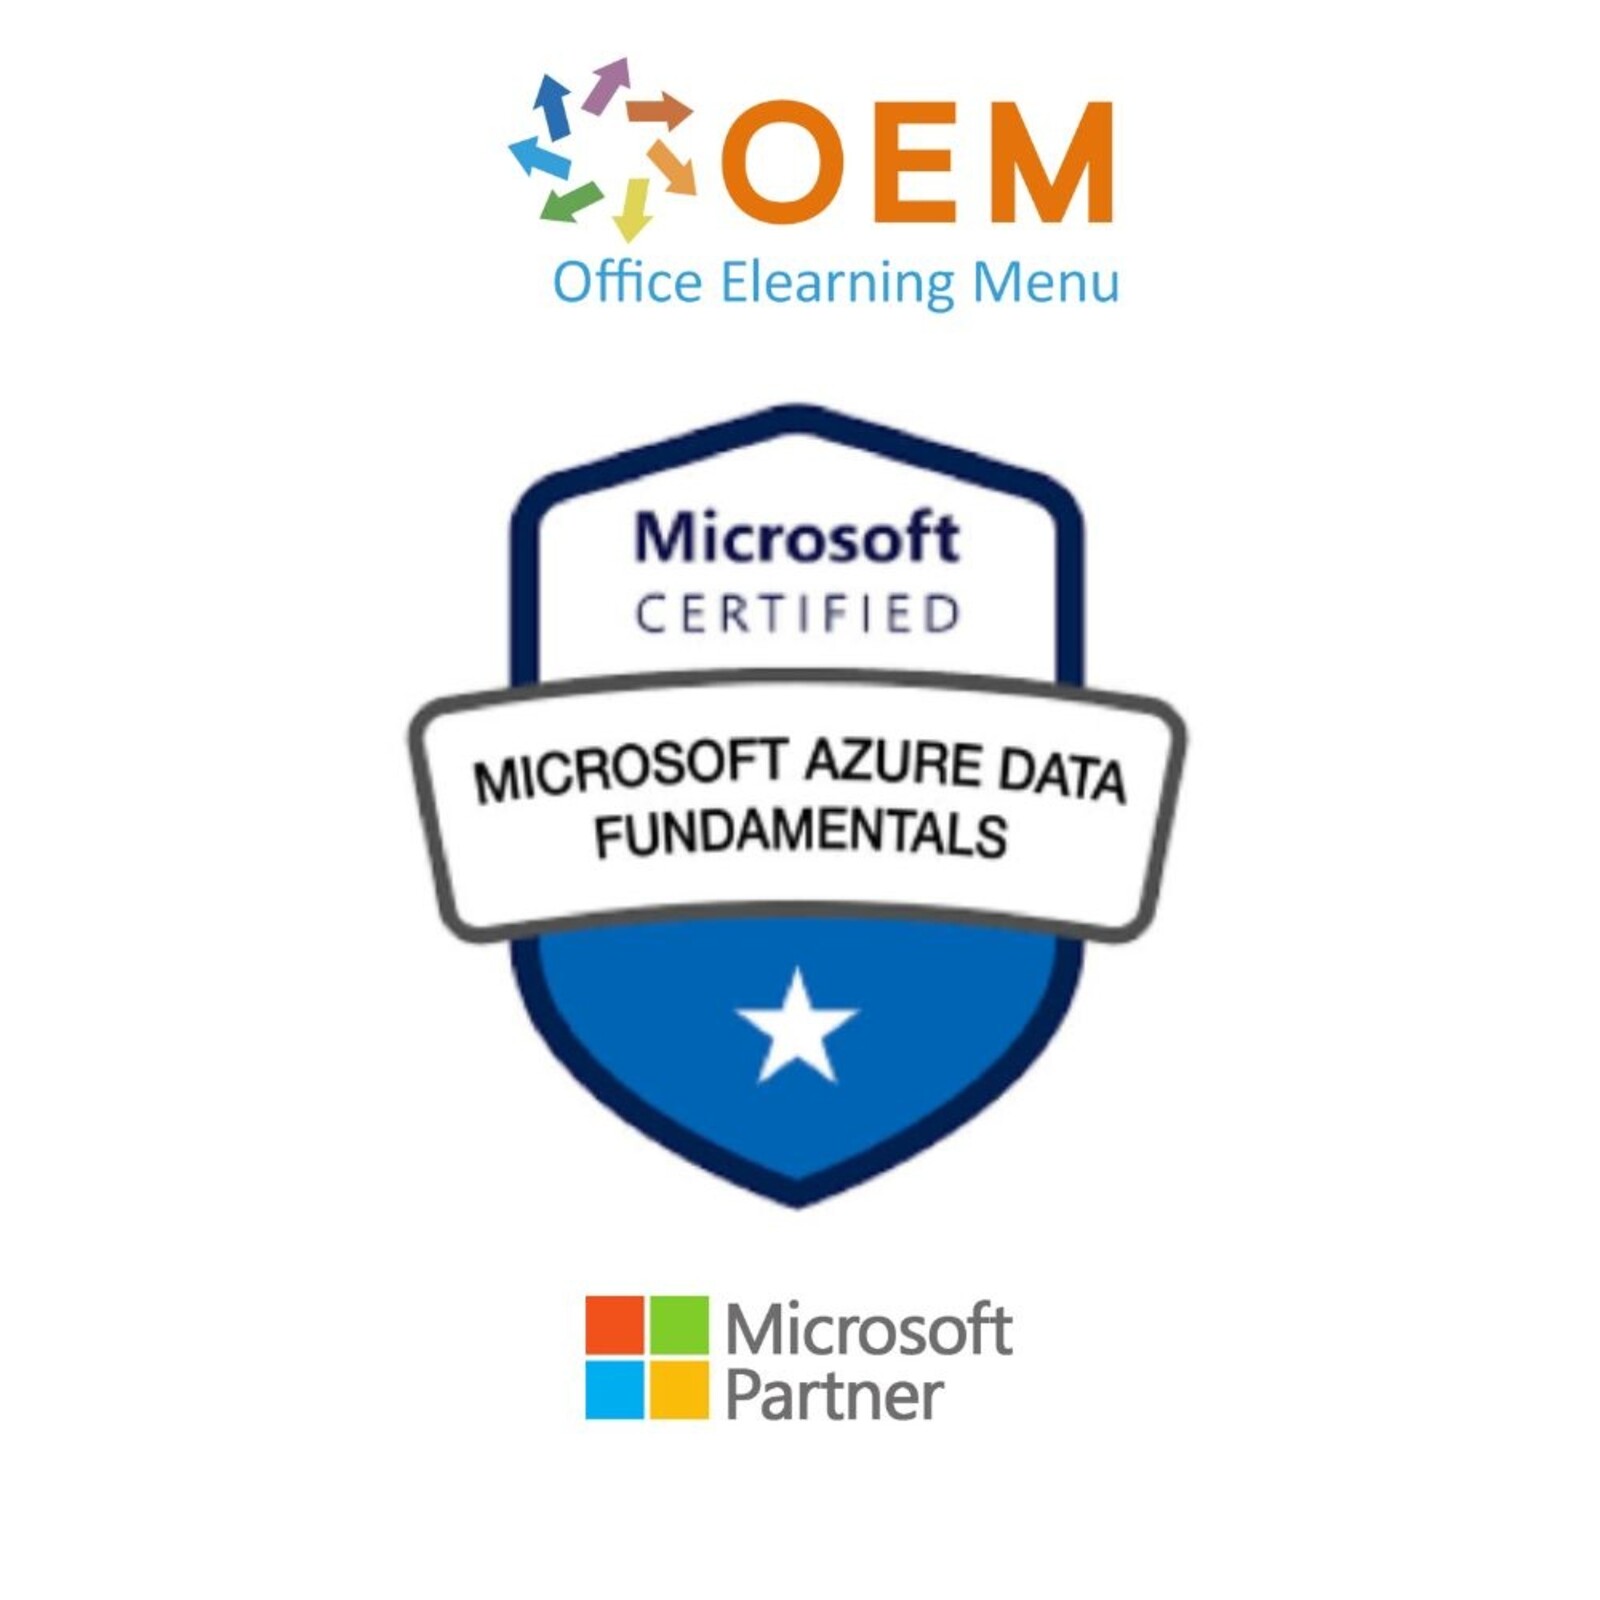 Certiport - Pearson Vue Examen DP-900 Microsoft Azure Data Fundamentals